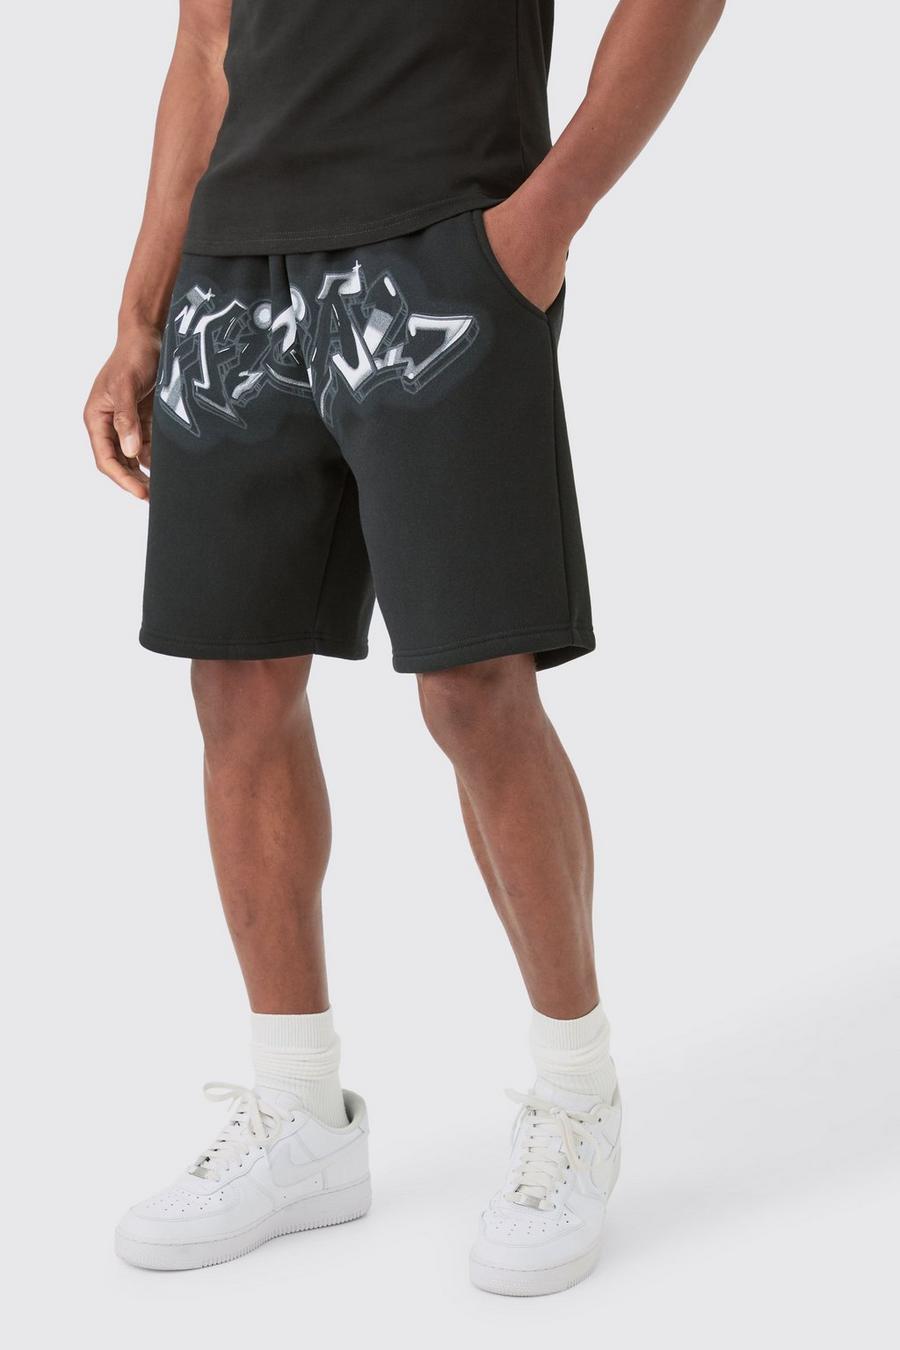 Lockere Official Shorts mit Graffiti-Print, Black